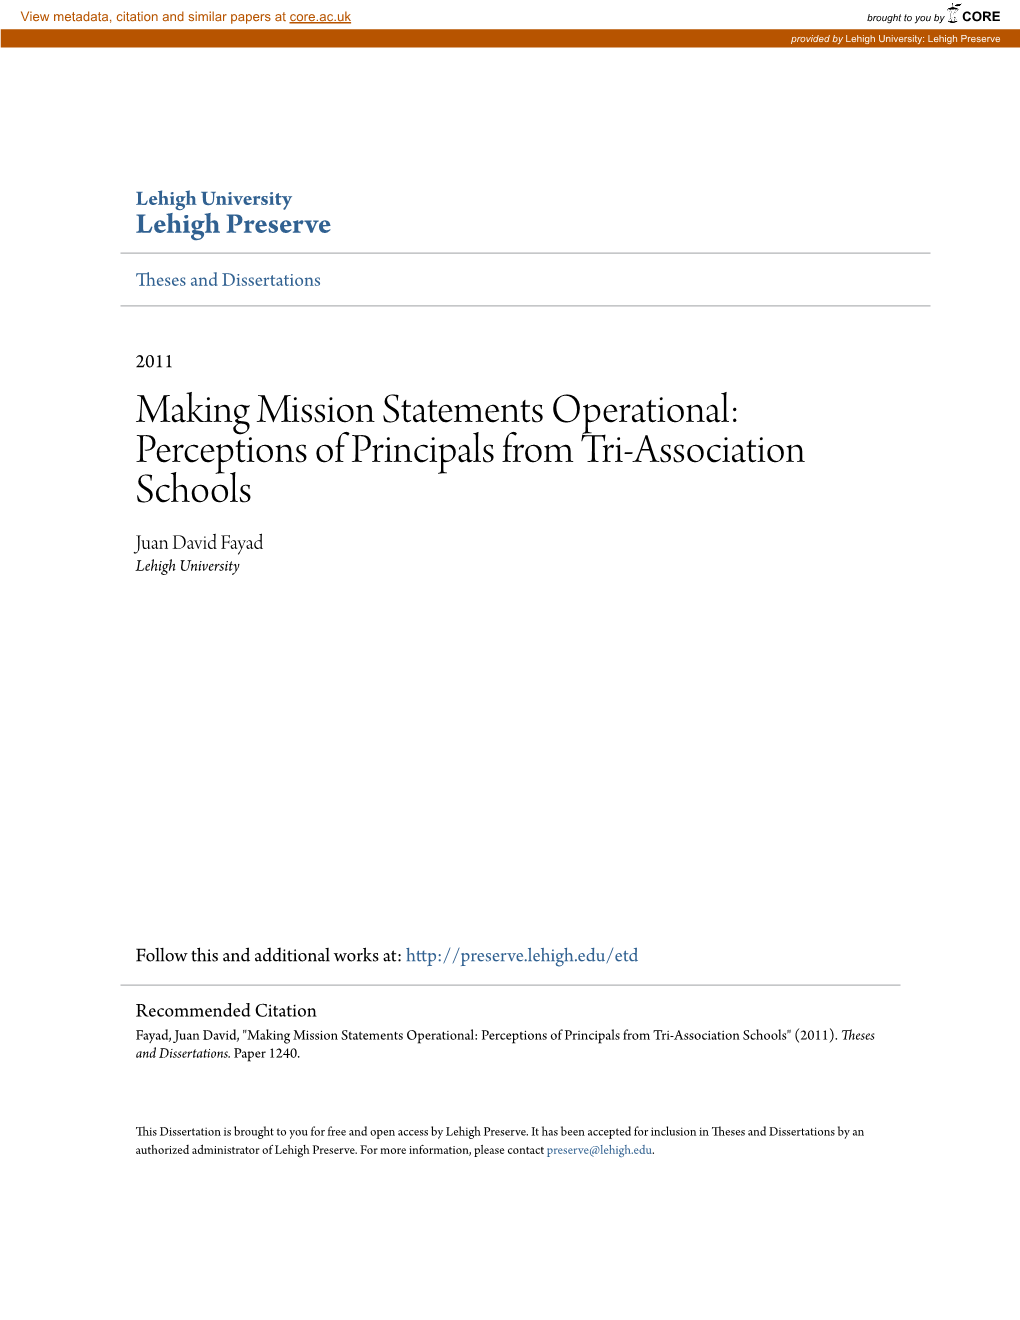 Making Mission Statements Operational: Perceptions of Principals from Tri-Association Schools Juan David Fayad Lehigh University